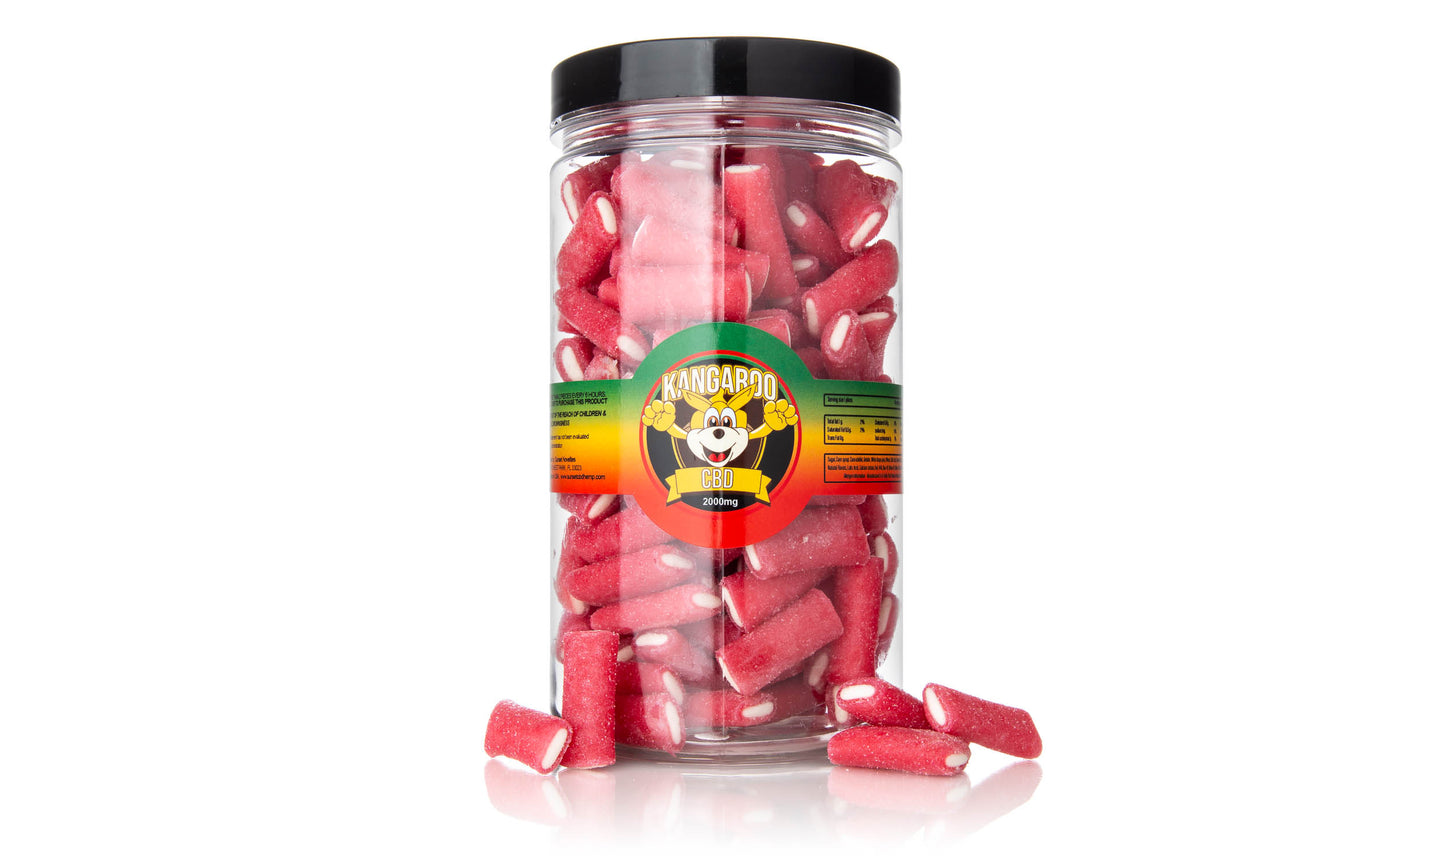 Kangaroo CBD Infused Strawberry Filled Tube Gummies